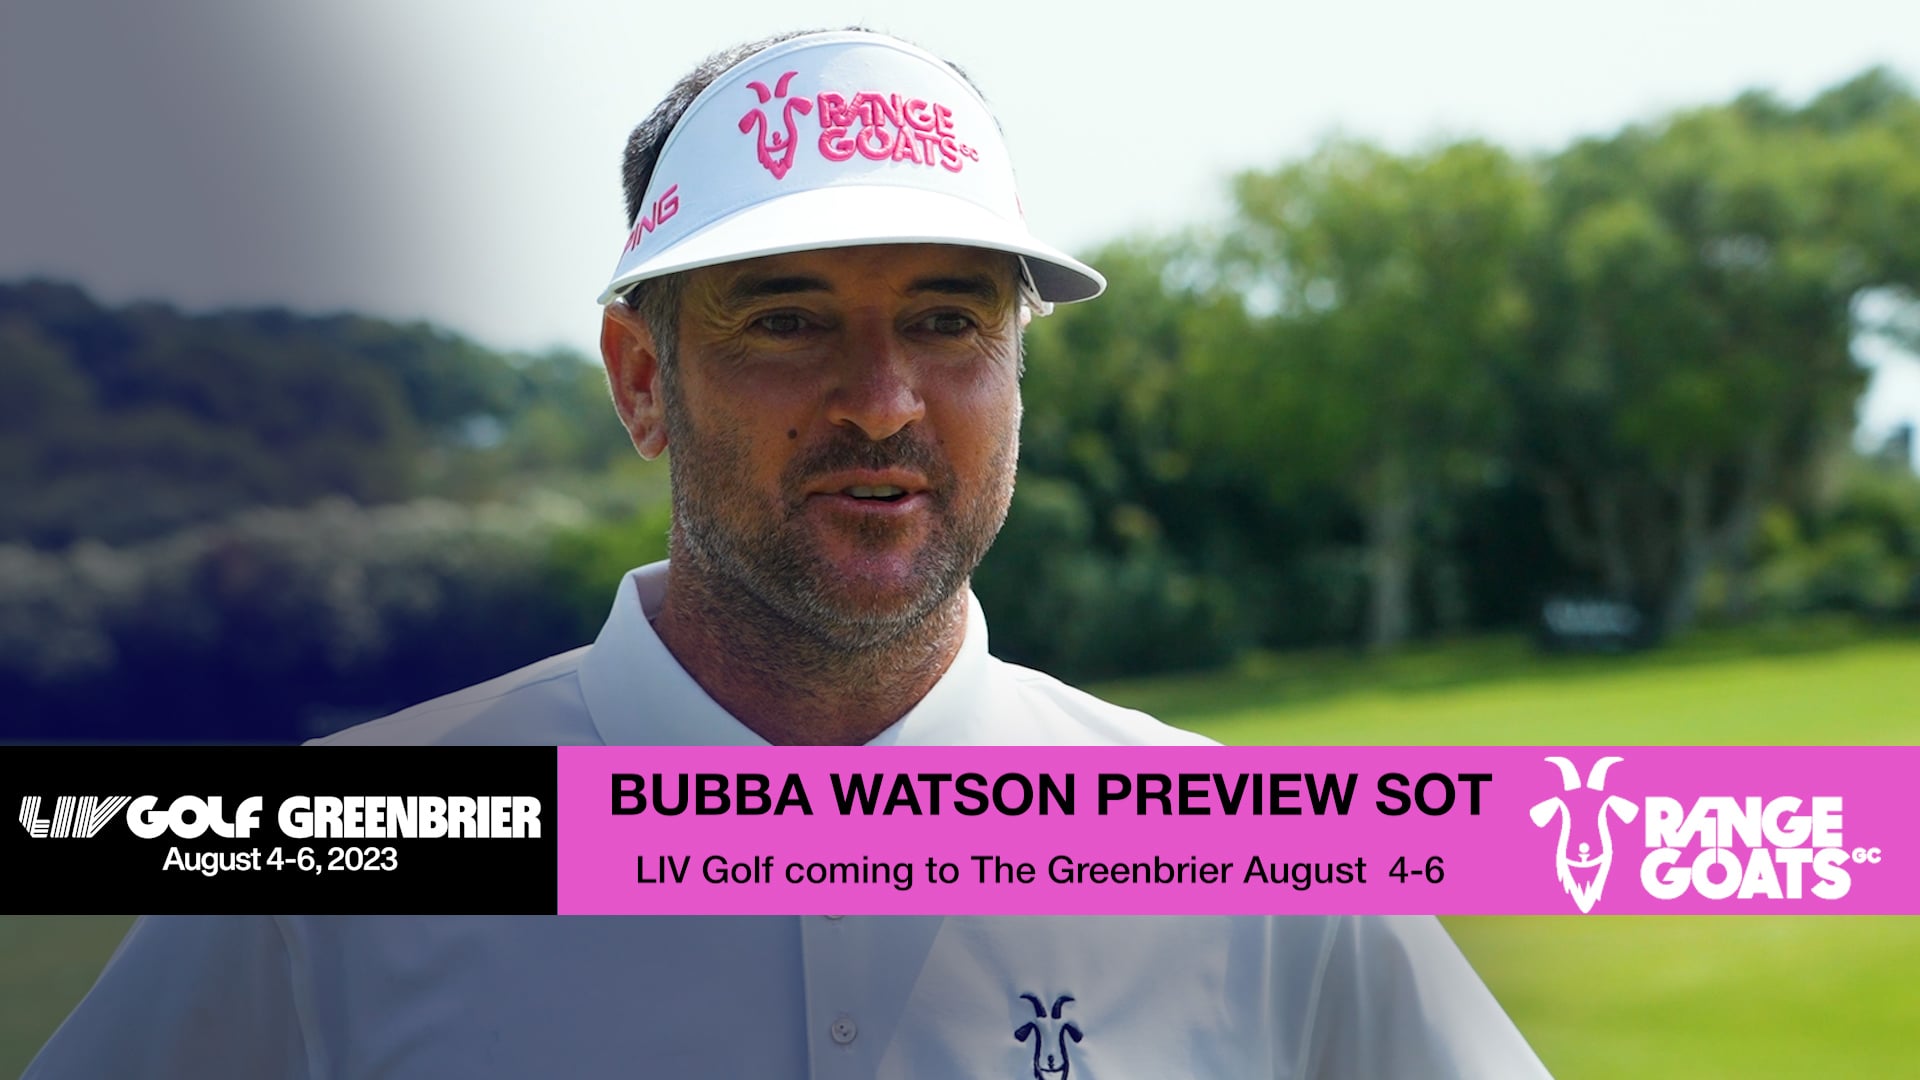 Bubba Watson LIV Golf Greenbrier Preview SOT on Vimeo